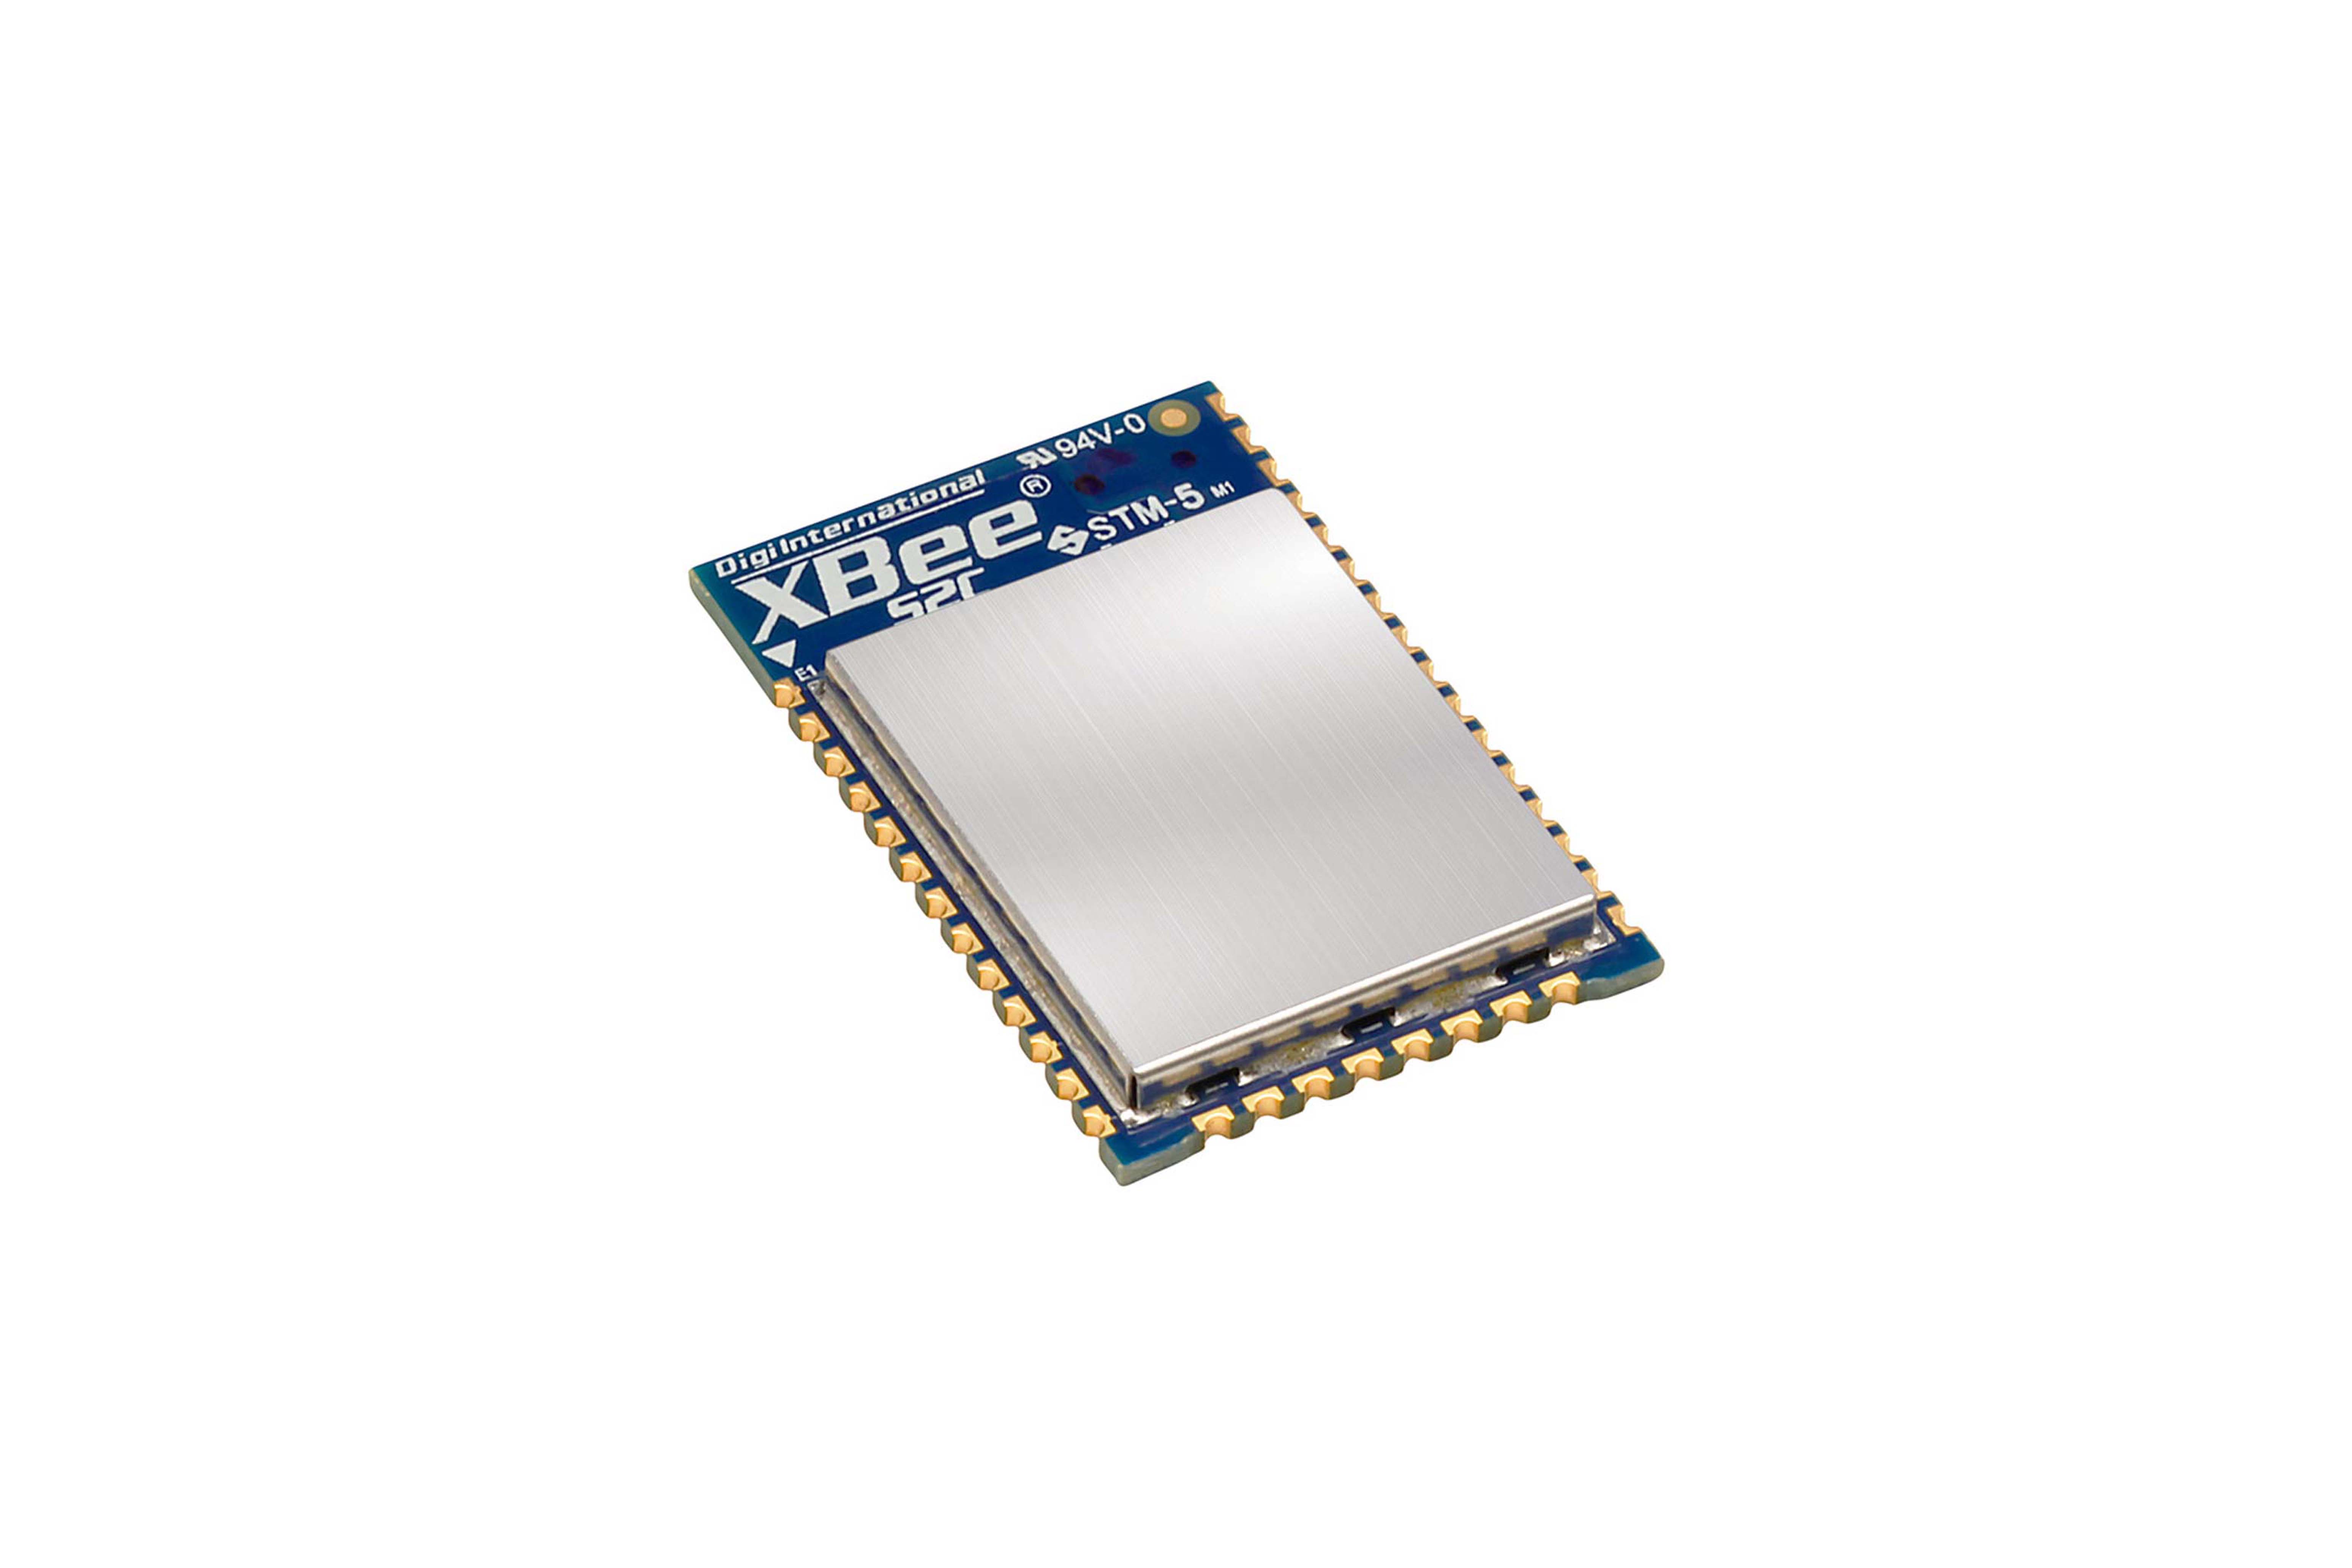 XBee S2C 802.15.4, 2,4 GHz, SMT